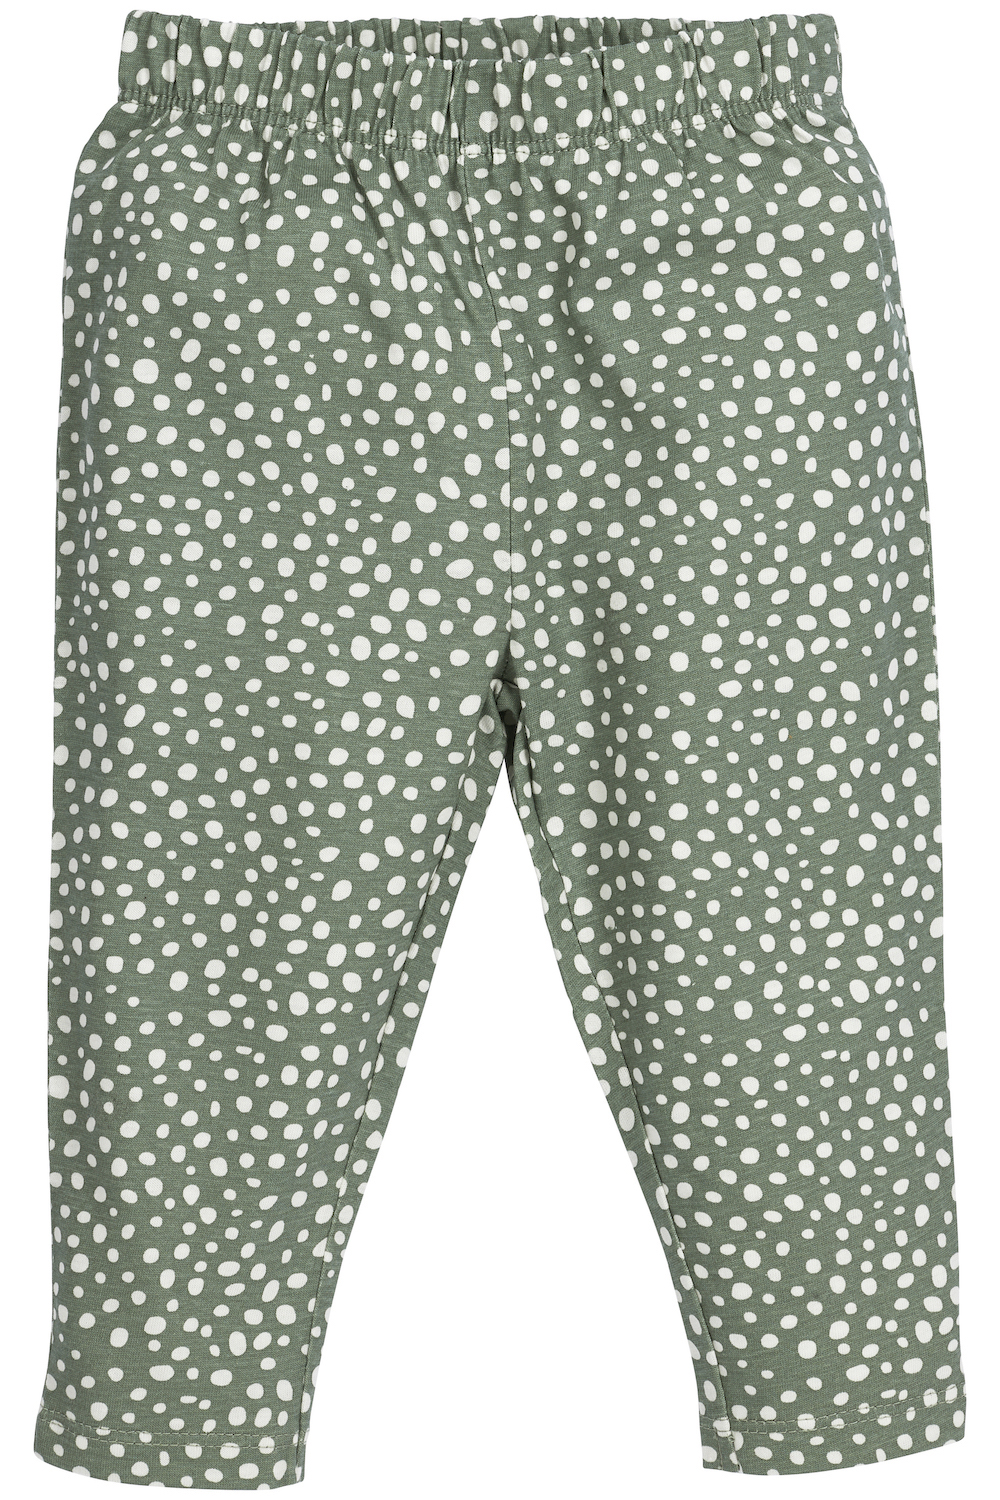 Baby Pyjama 2-pack Cheetah - forest green - 50/56